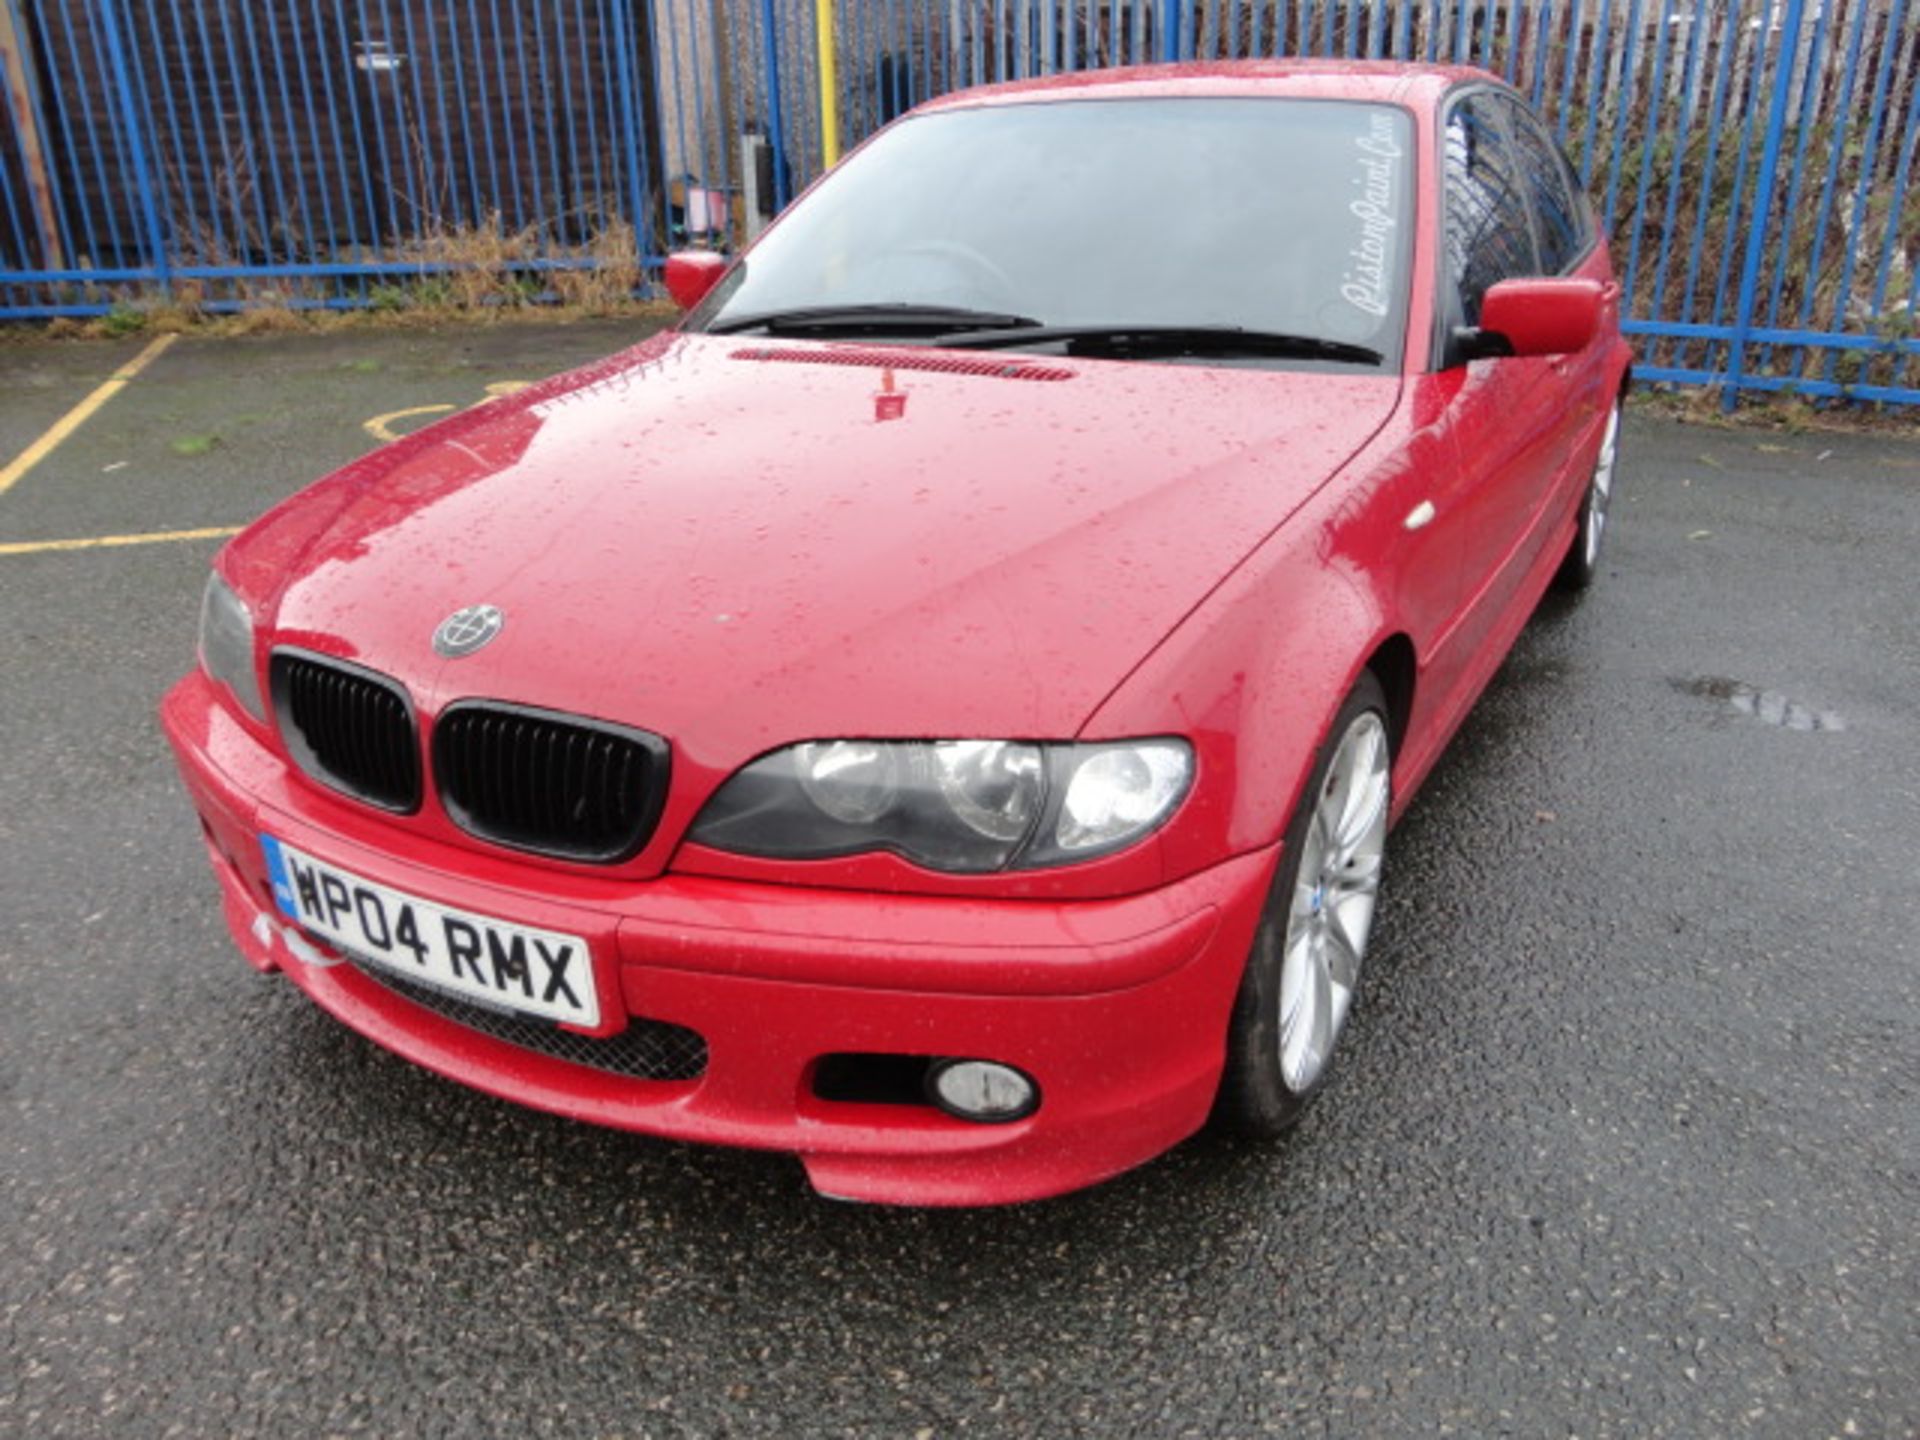 2004/04 REG BMW 320D SPORT 2.0 MANUAL METALLIC RED *NO VAT* - Image 3 of 10